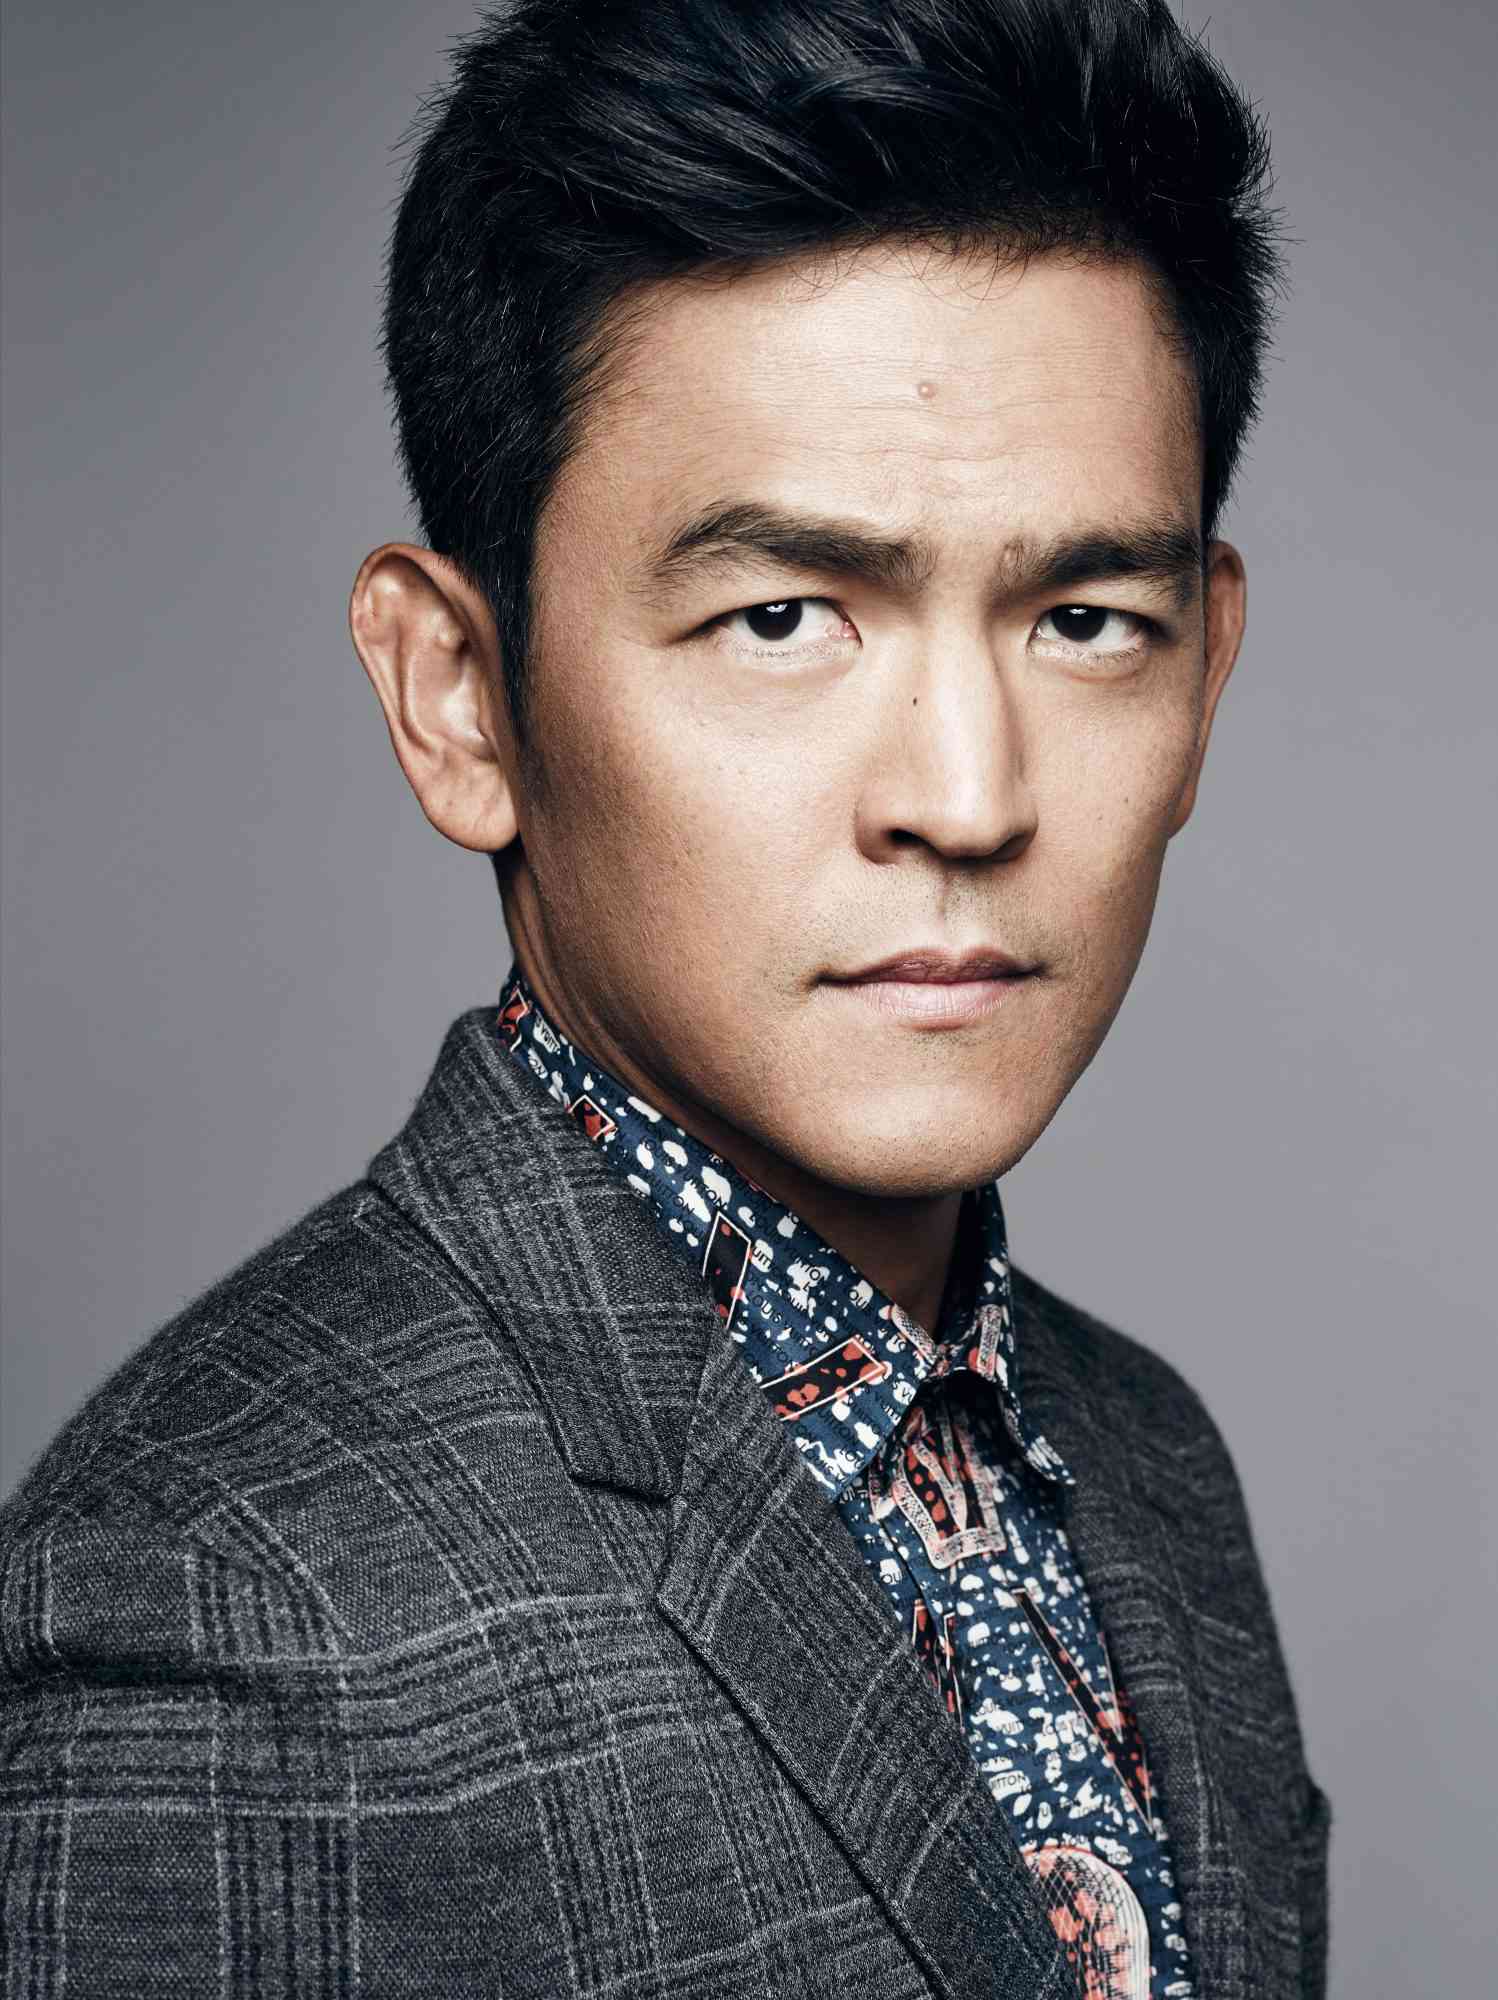 Actor John Cho